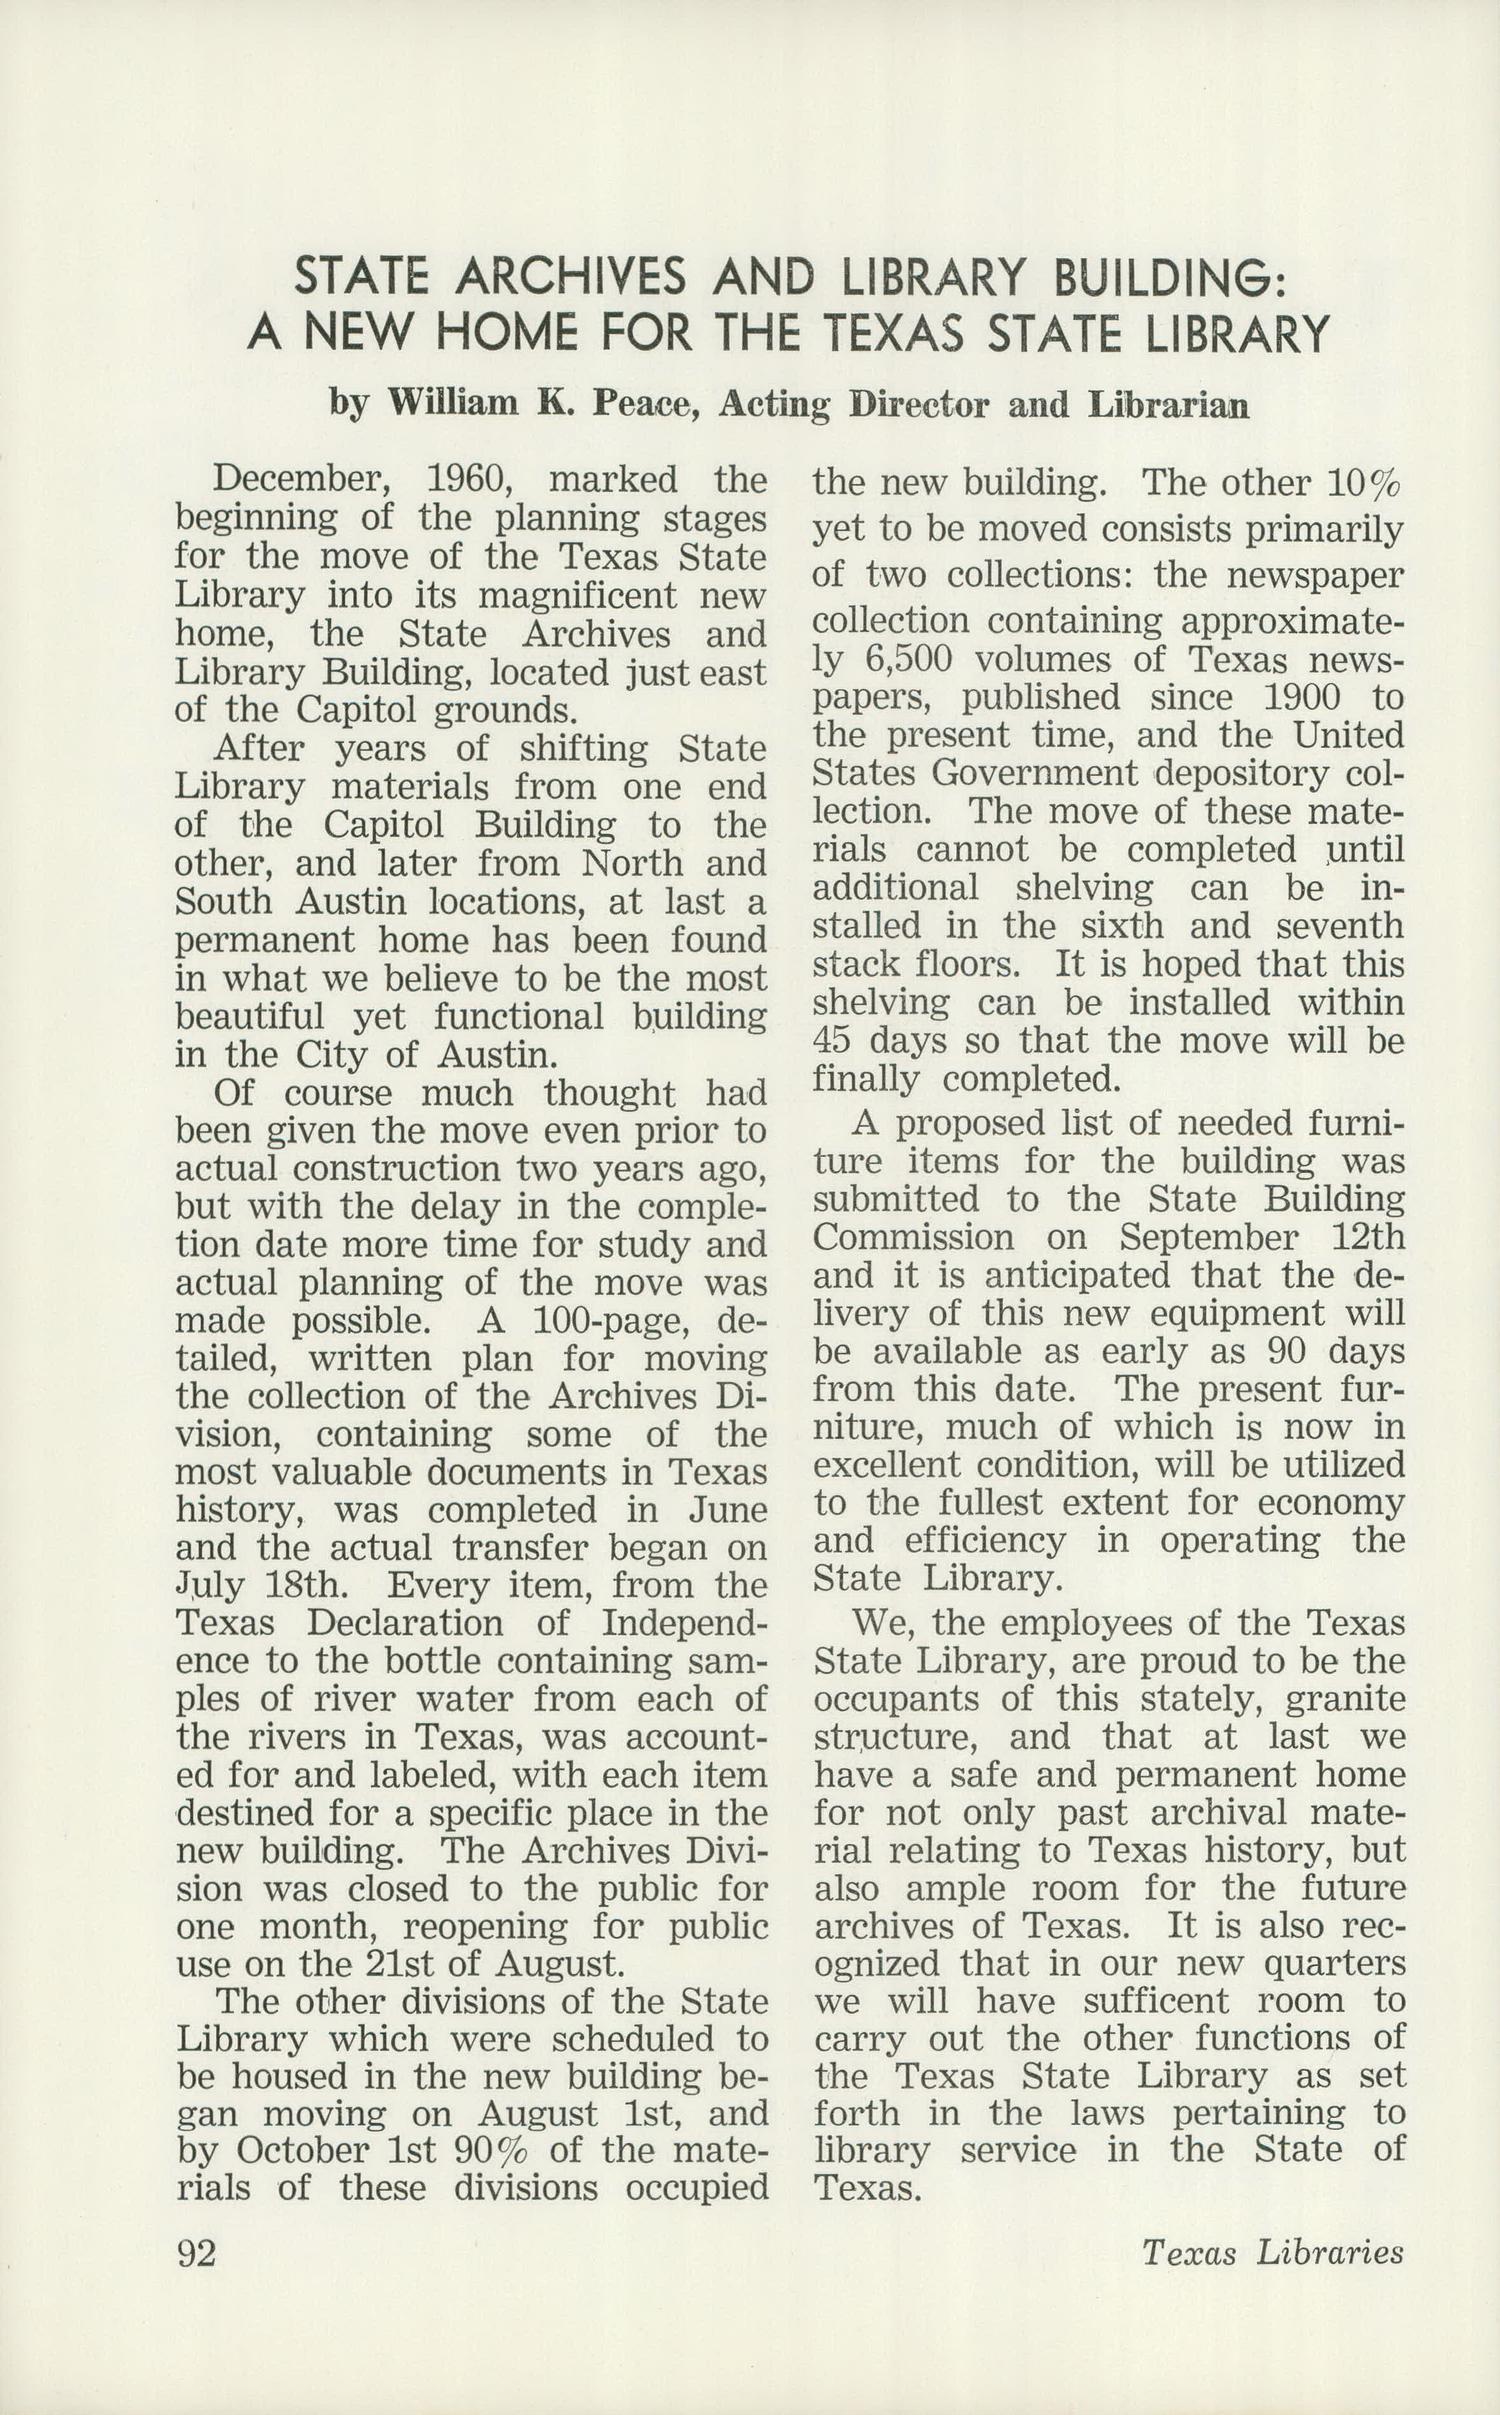 Texas Libraries, Volume 23, Number 5, September-October 1961
                                                
                                                    92
                                                